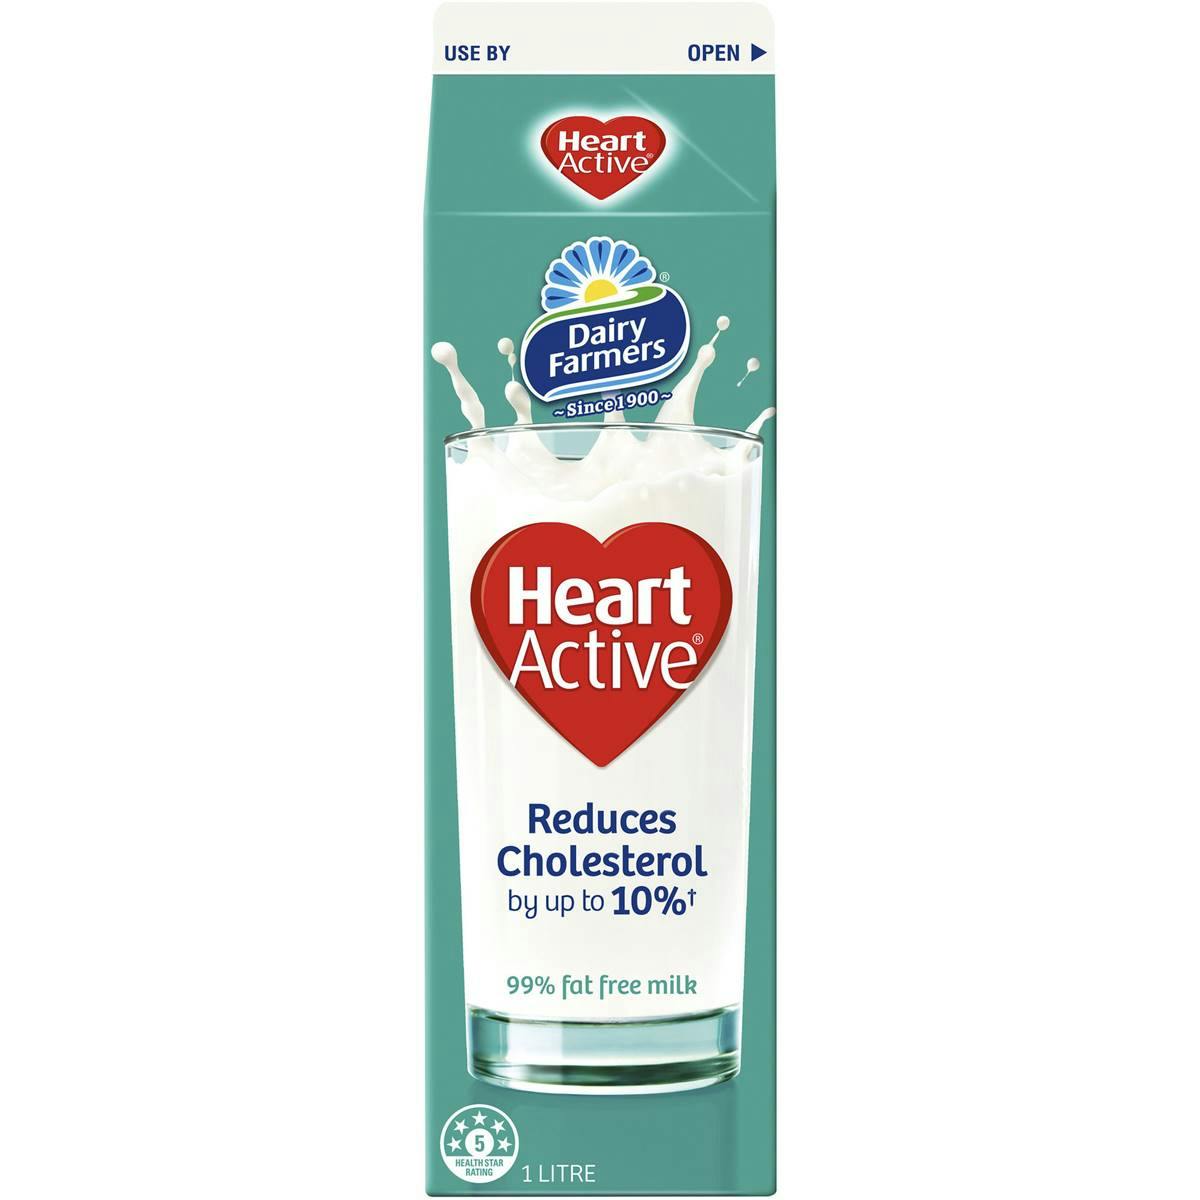 Dairy Farmers' Heart Active Light Milk 1L